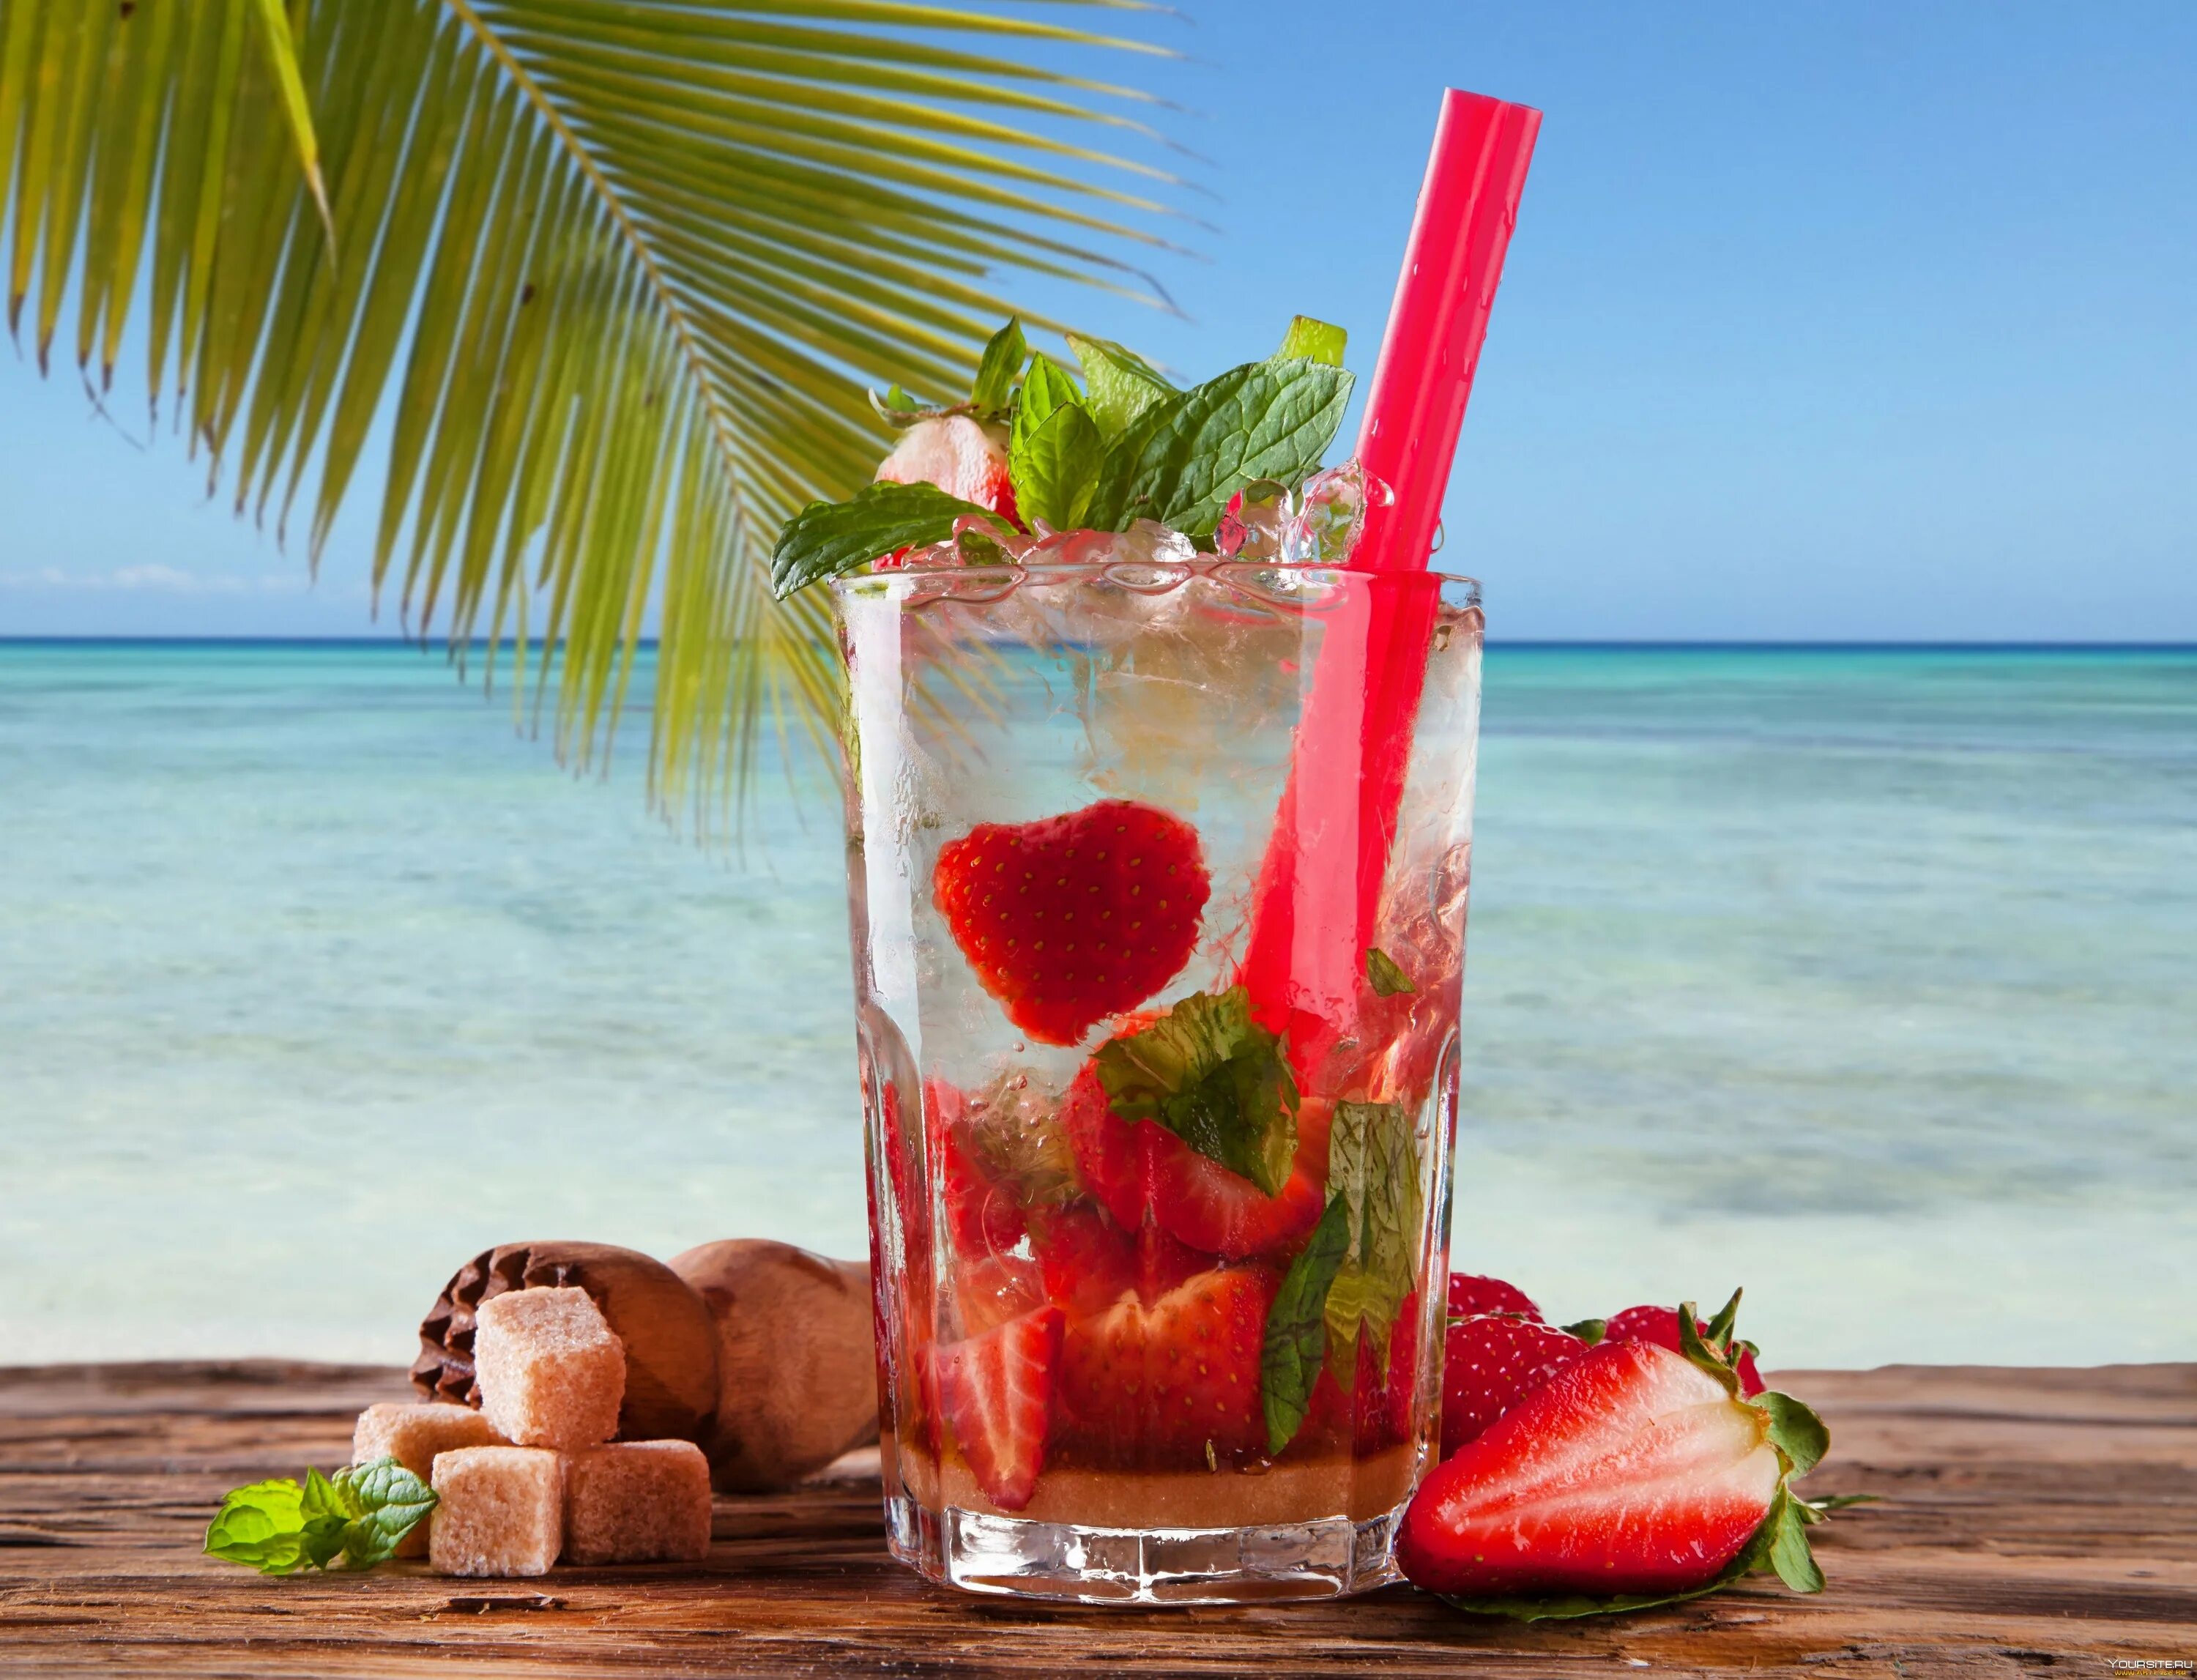 Мохито солнце. Коктейль на пляже. Коктейль на море. Лето пляж коктейль. Пляж коктейль пальмы.